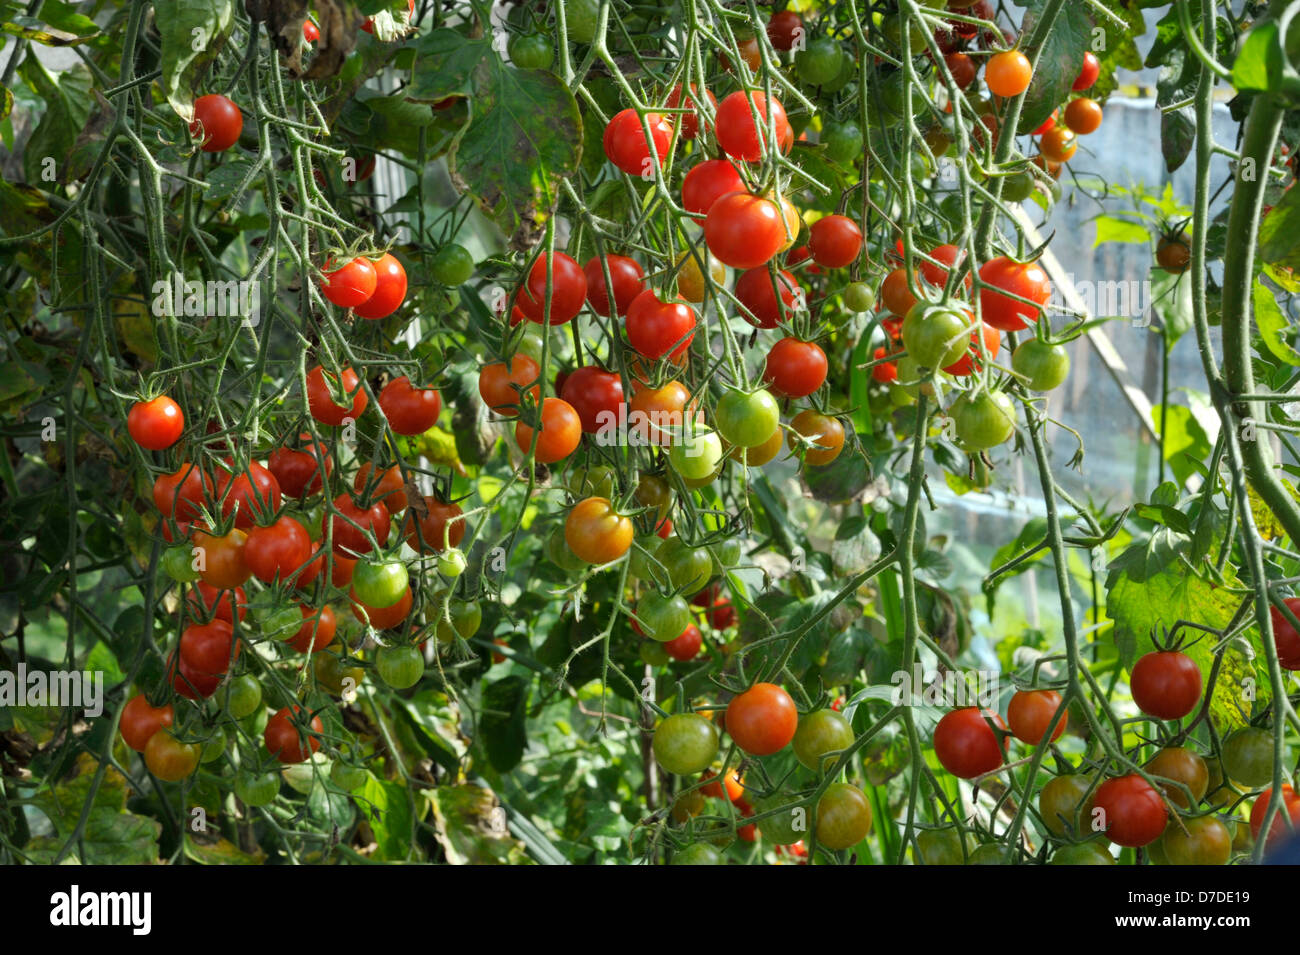 Greenhouse grown sweet million F1 cherry tomatoes. Stock Photo